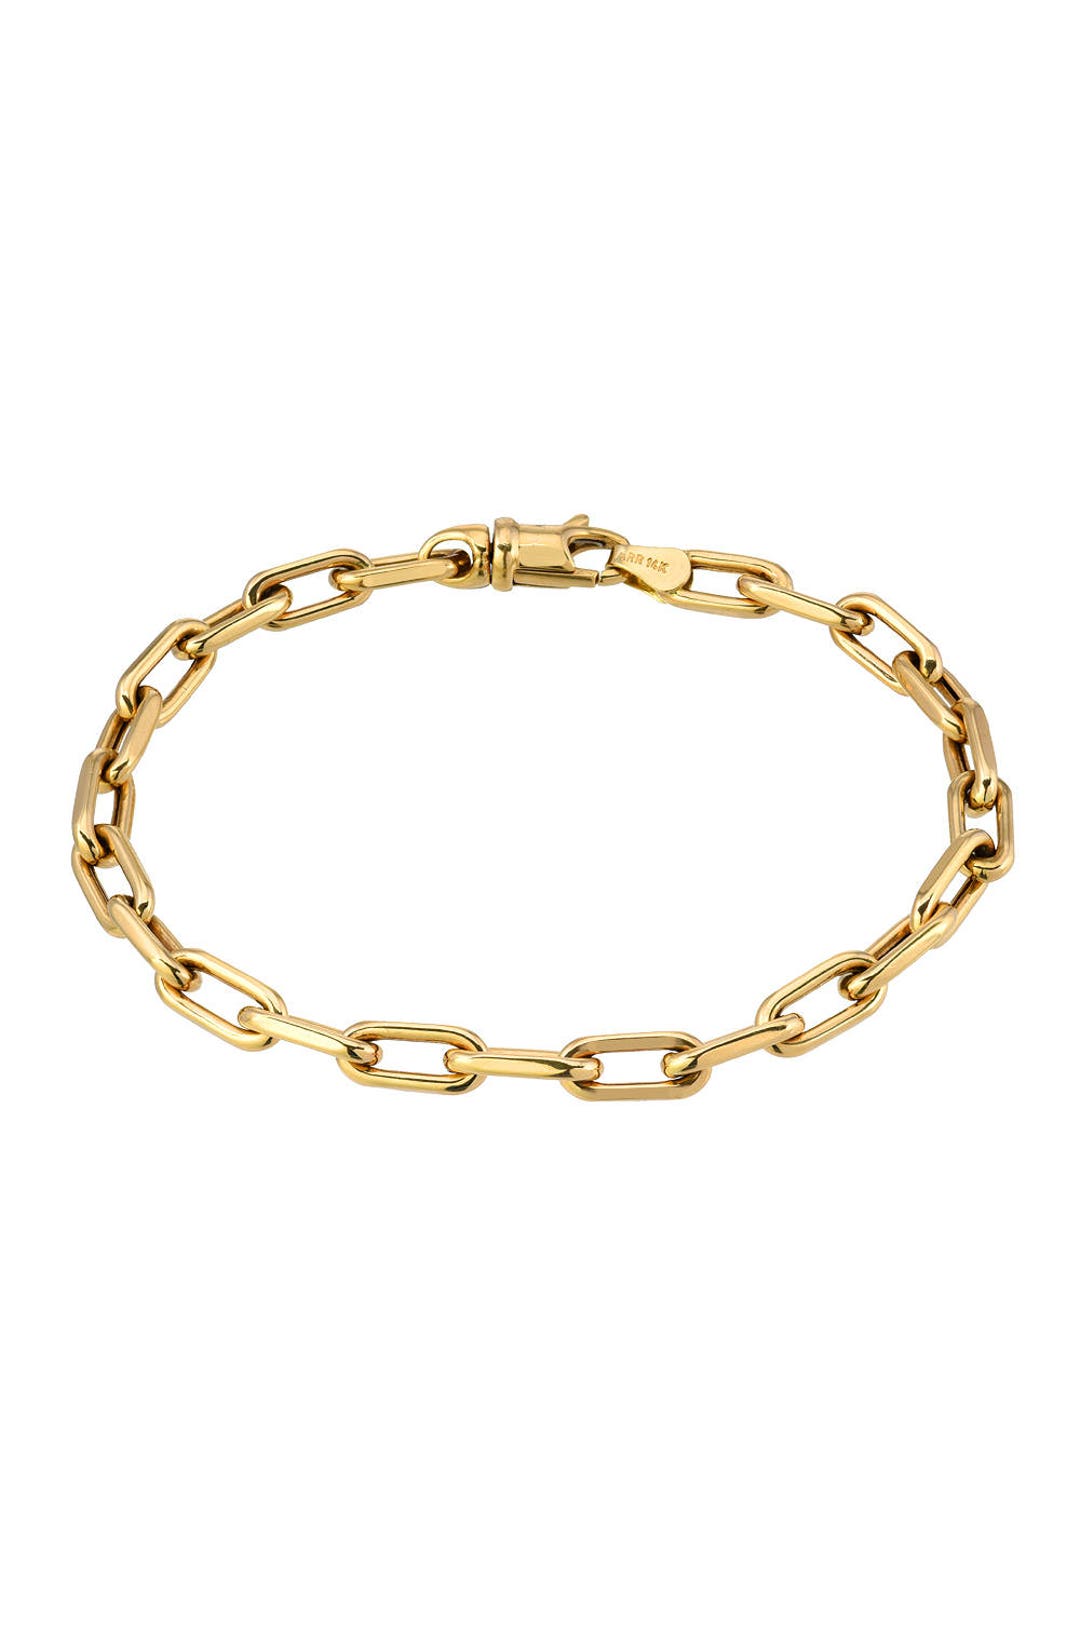 Extra-Large Open Link Bracelet White Gold / 7.25